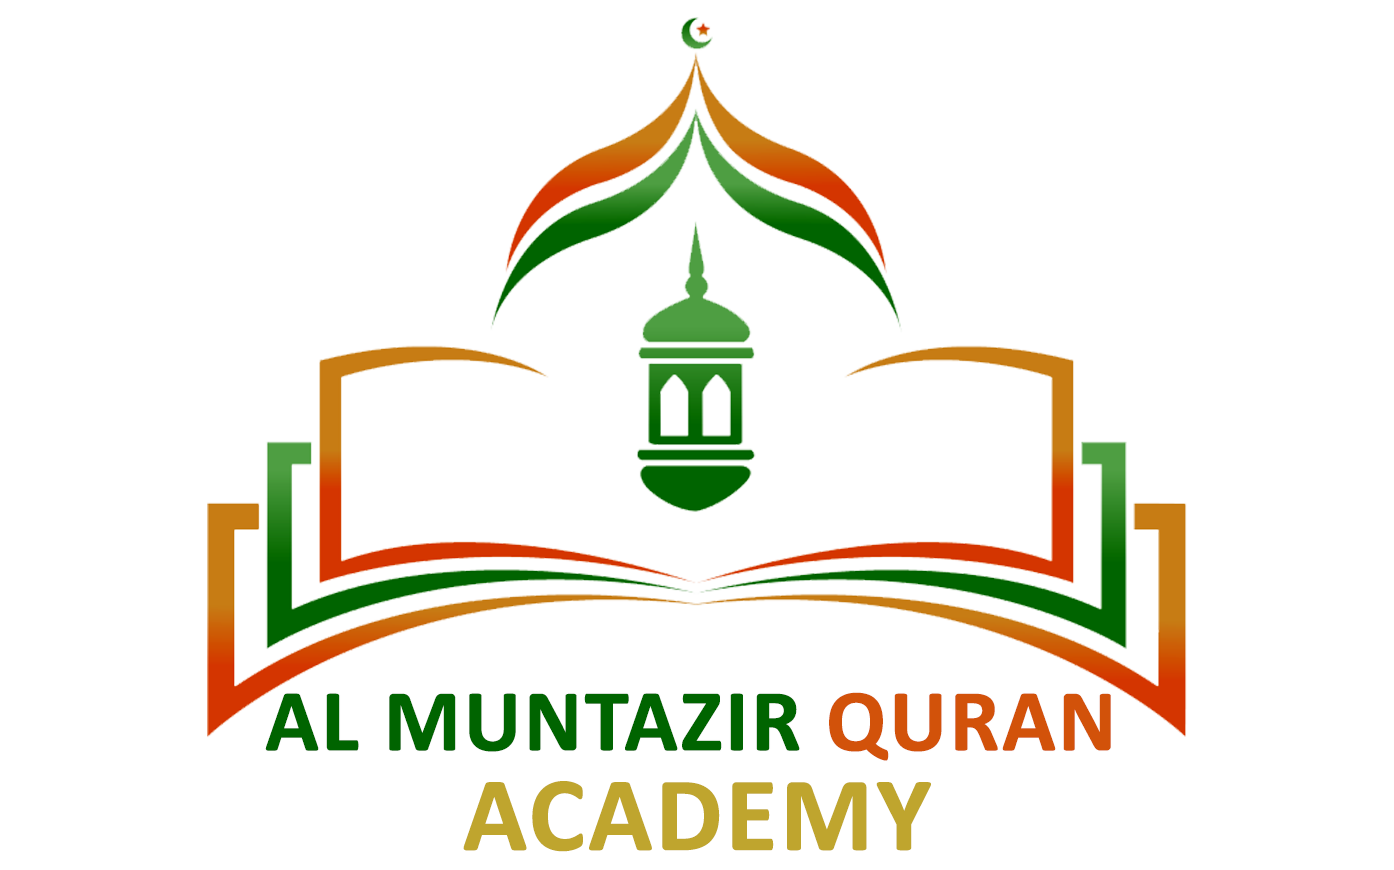 Shia Quran Academy